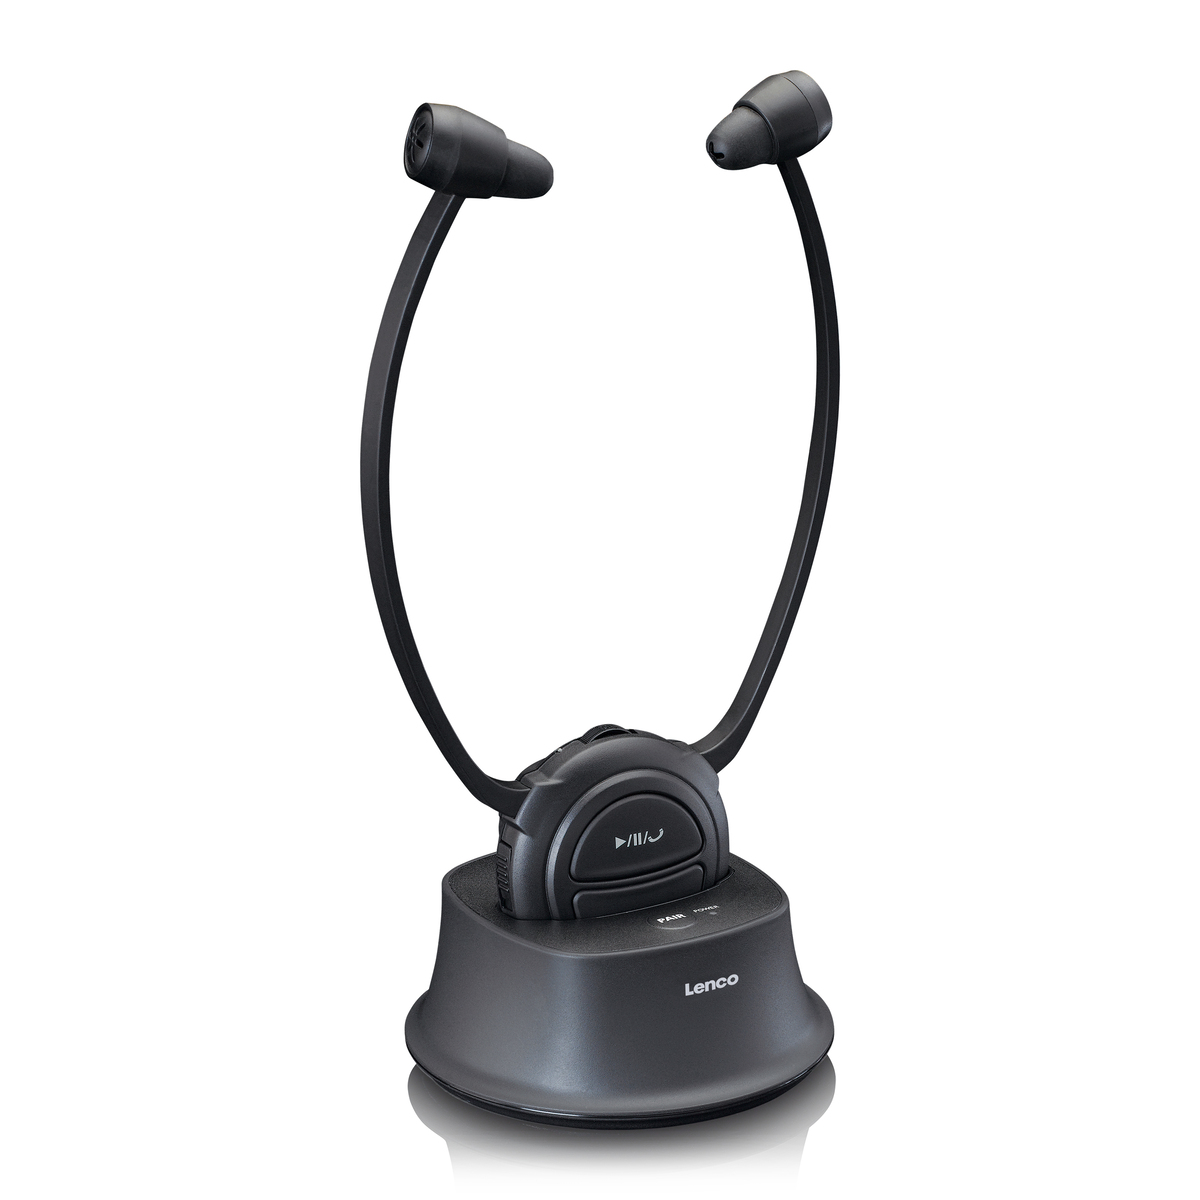 Schwarz HPW-400BK - Kabellose Gehörverstärker-Kopfhörer, Lenco best4you